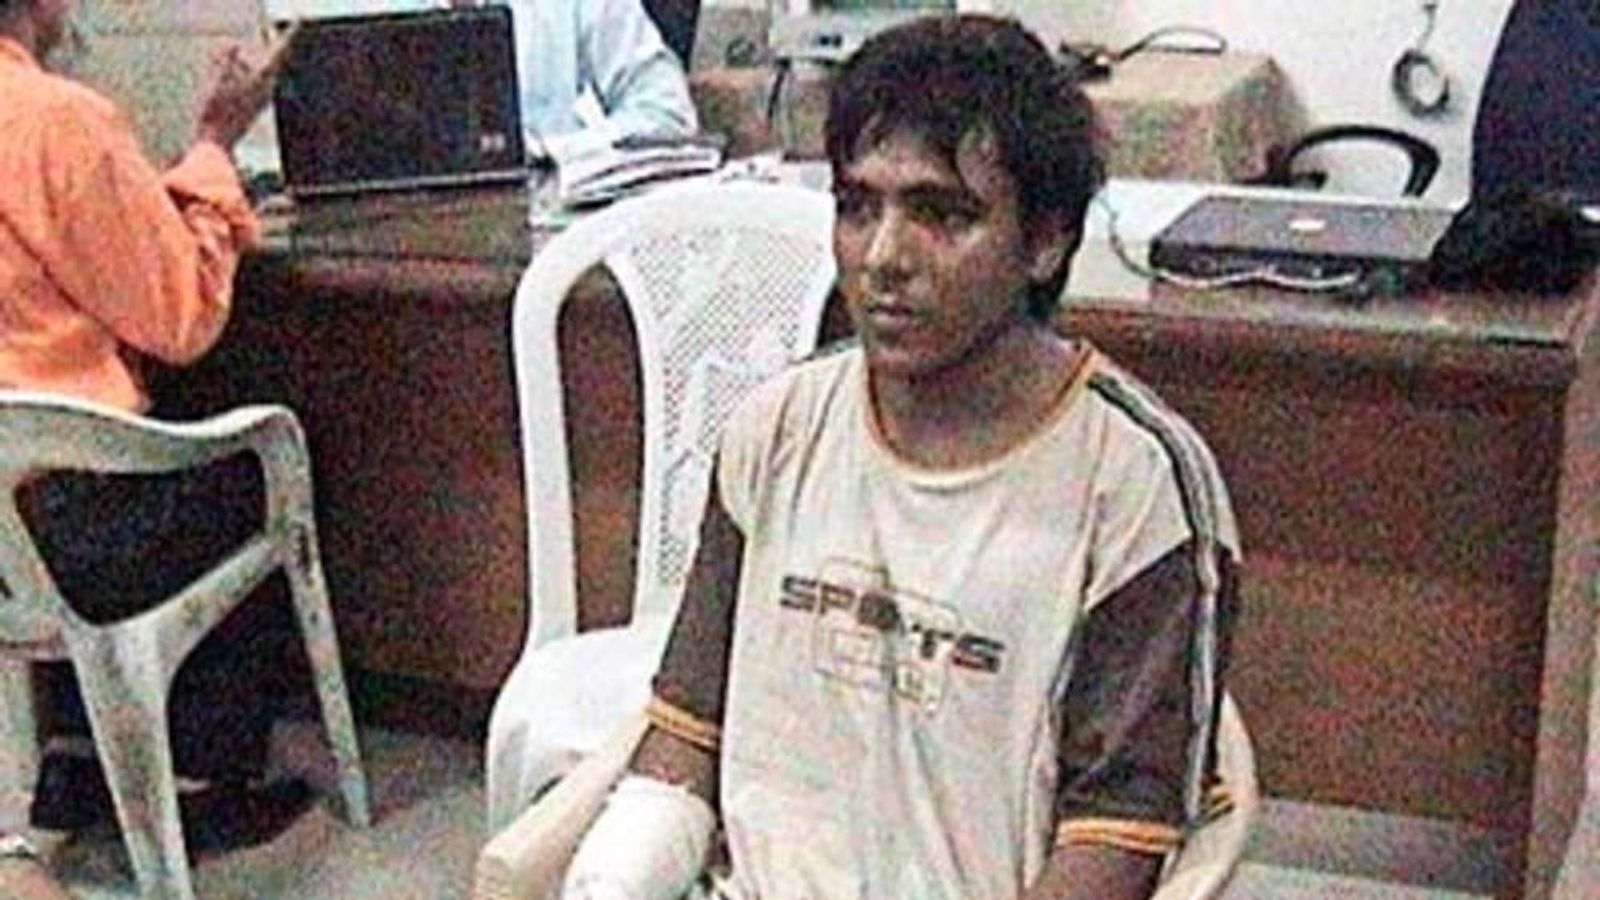 Нападение на мумбаи. Мохаммед аджмал Амир Касаб. Теракт в Мумбаи 2008 аджмал Касаб. Атака Мумбаи 2008 террористы. Индия 2008 теракт отель Мумбаи.